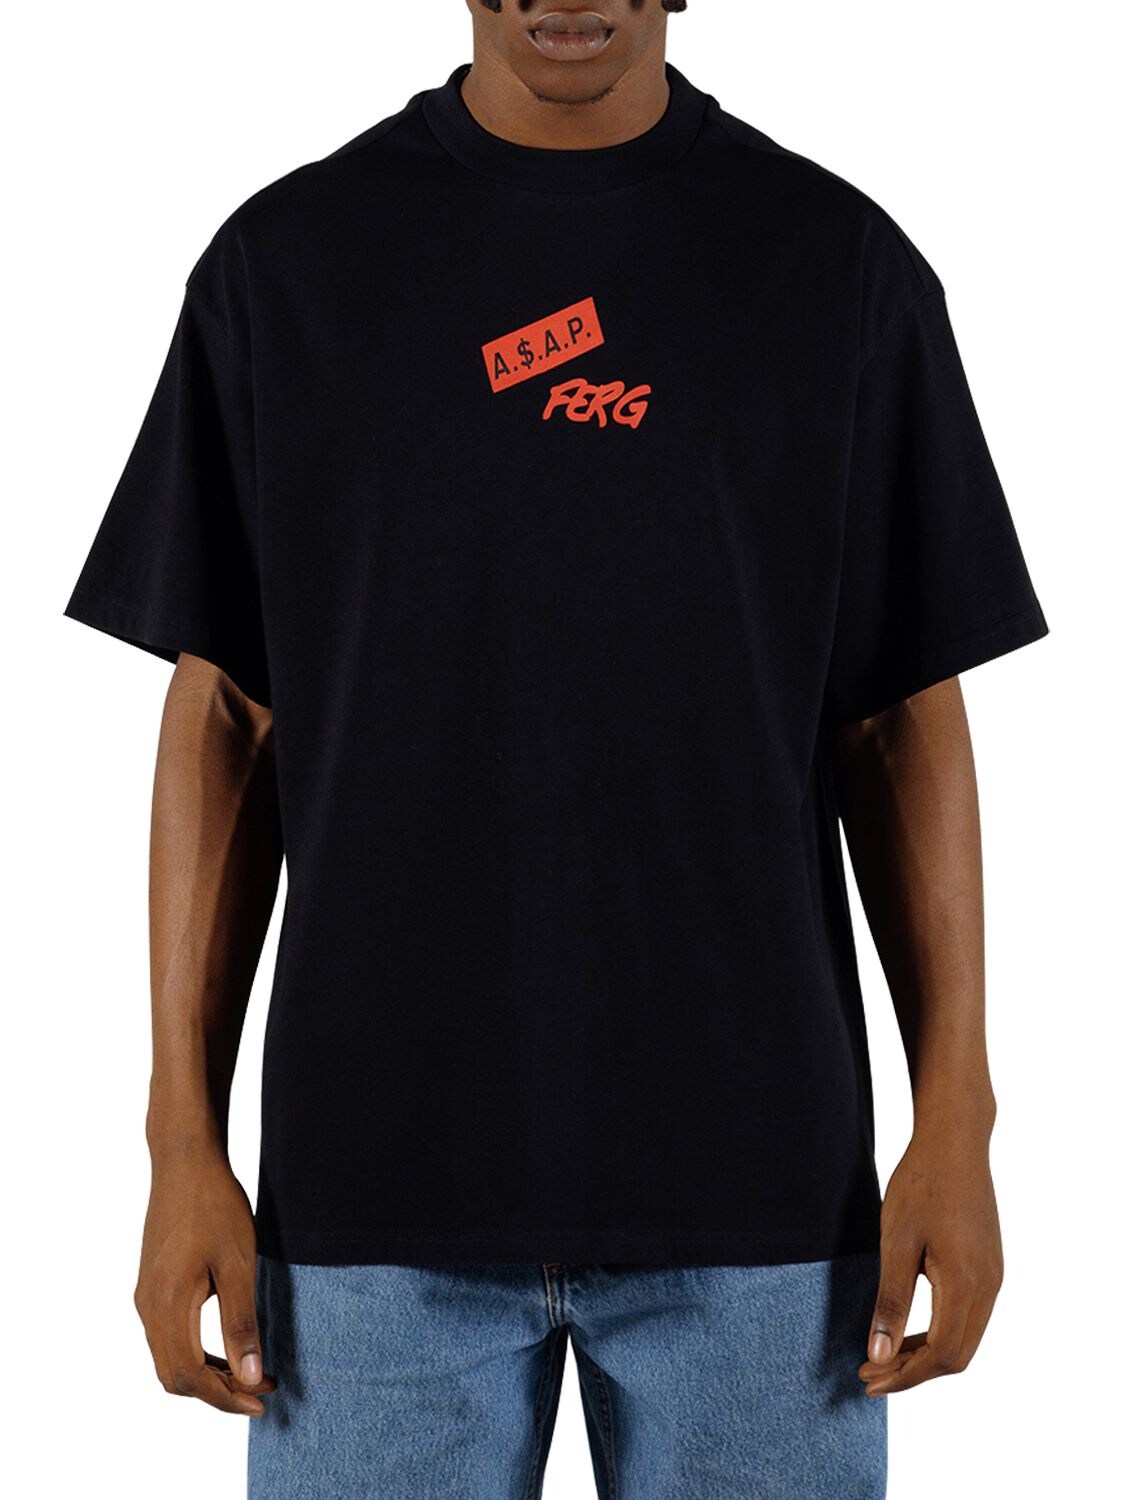 A$ap Ferg By Platformx Oversize Printed Cotton Jersey T-shirt In Black